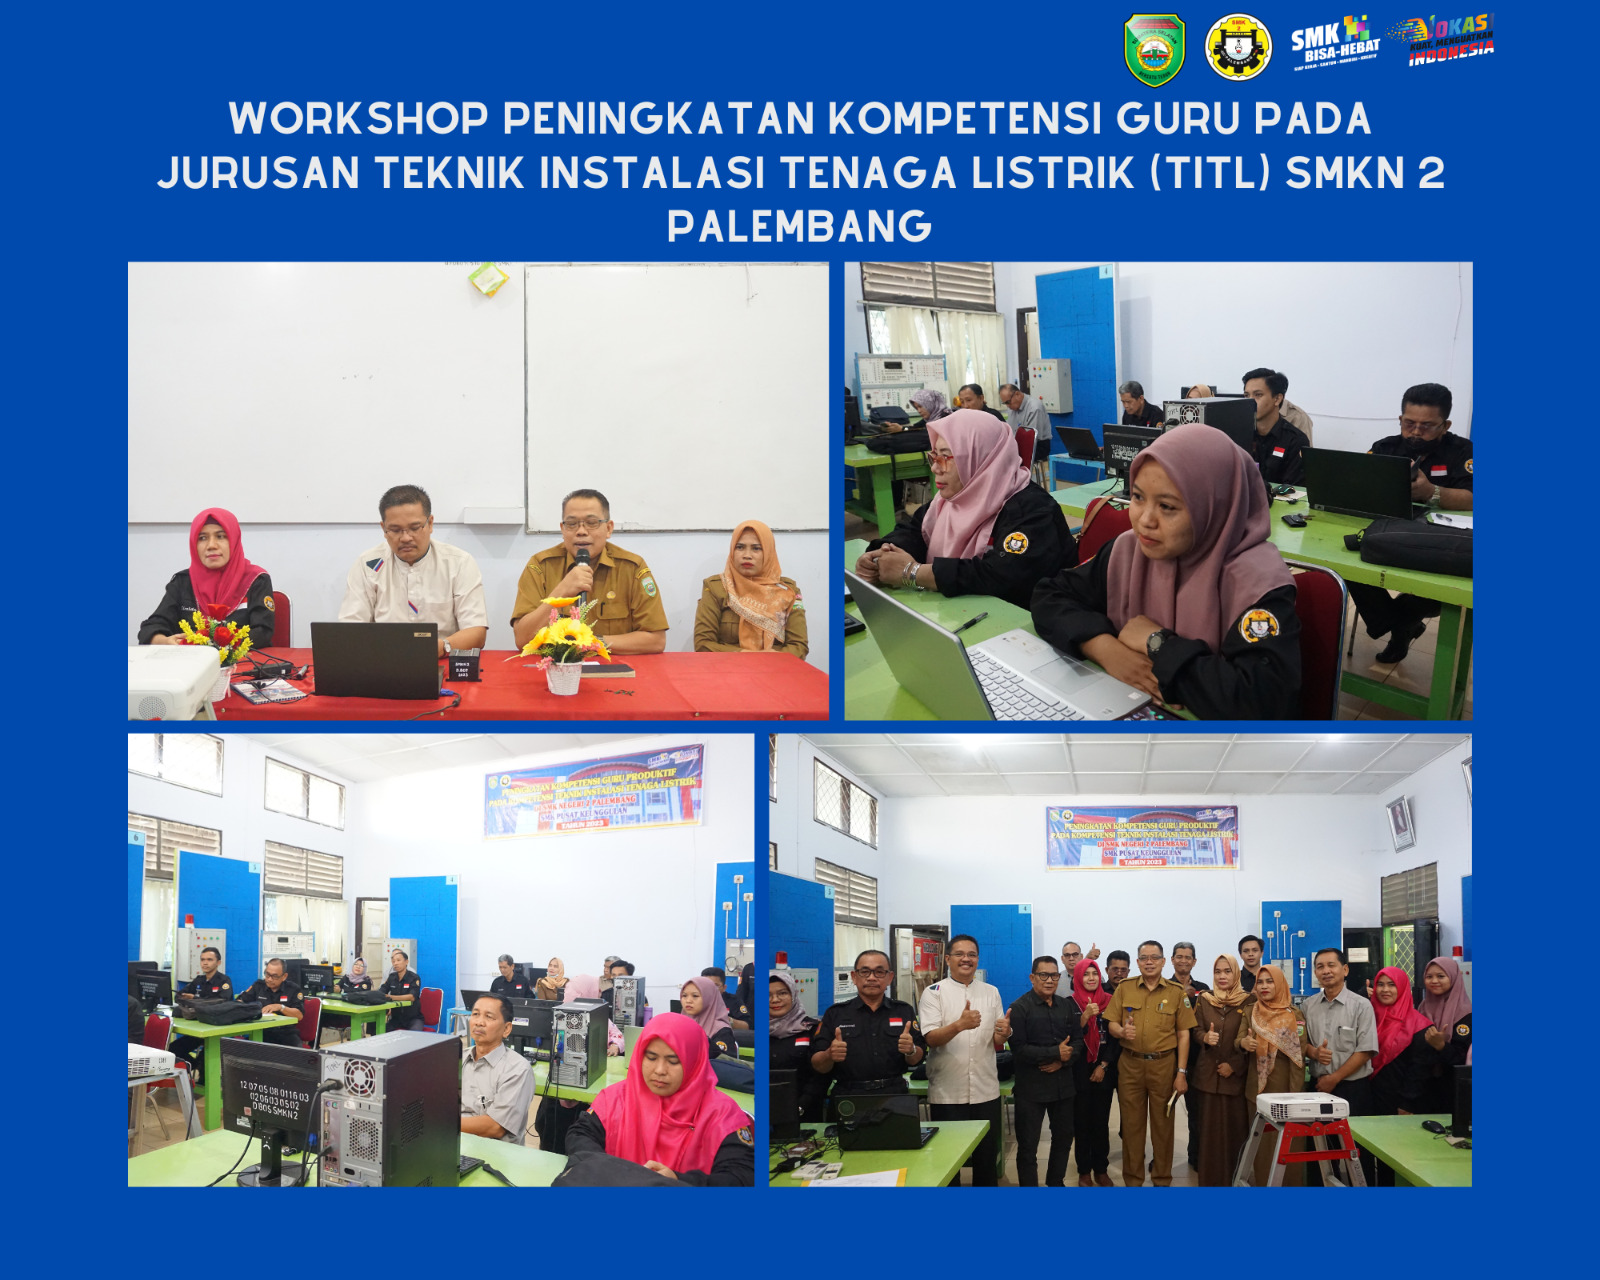 Pelaksanaan Kegiatan Peningkatan Kompetensi Guru Produktif Pada Program Keahlian Teknik Otomotif Instalasi Tenaga Listrik (TITL) di SMK Negeri 2 Palembang